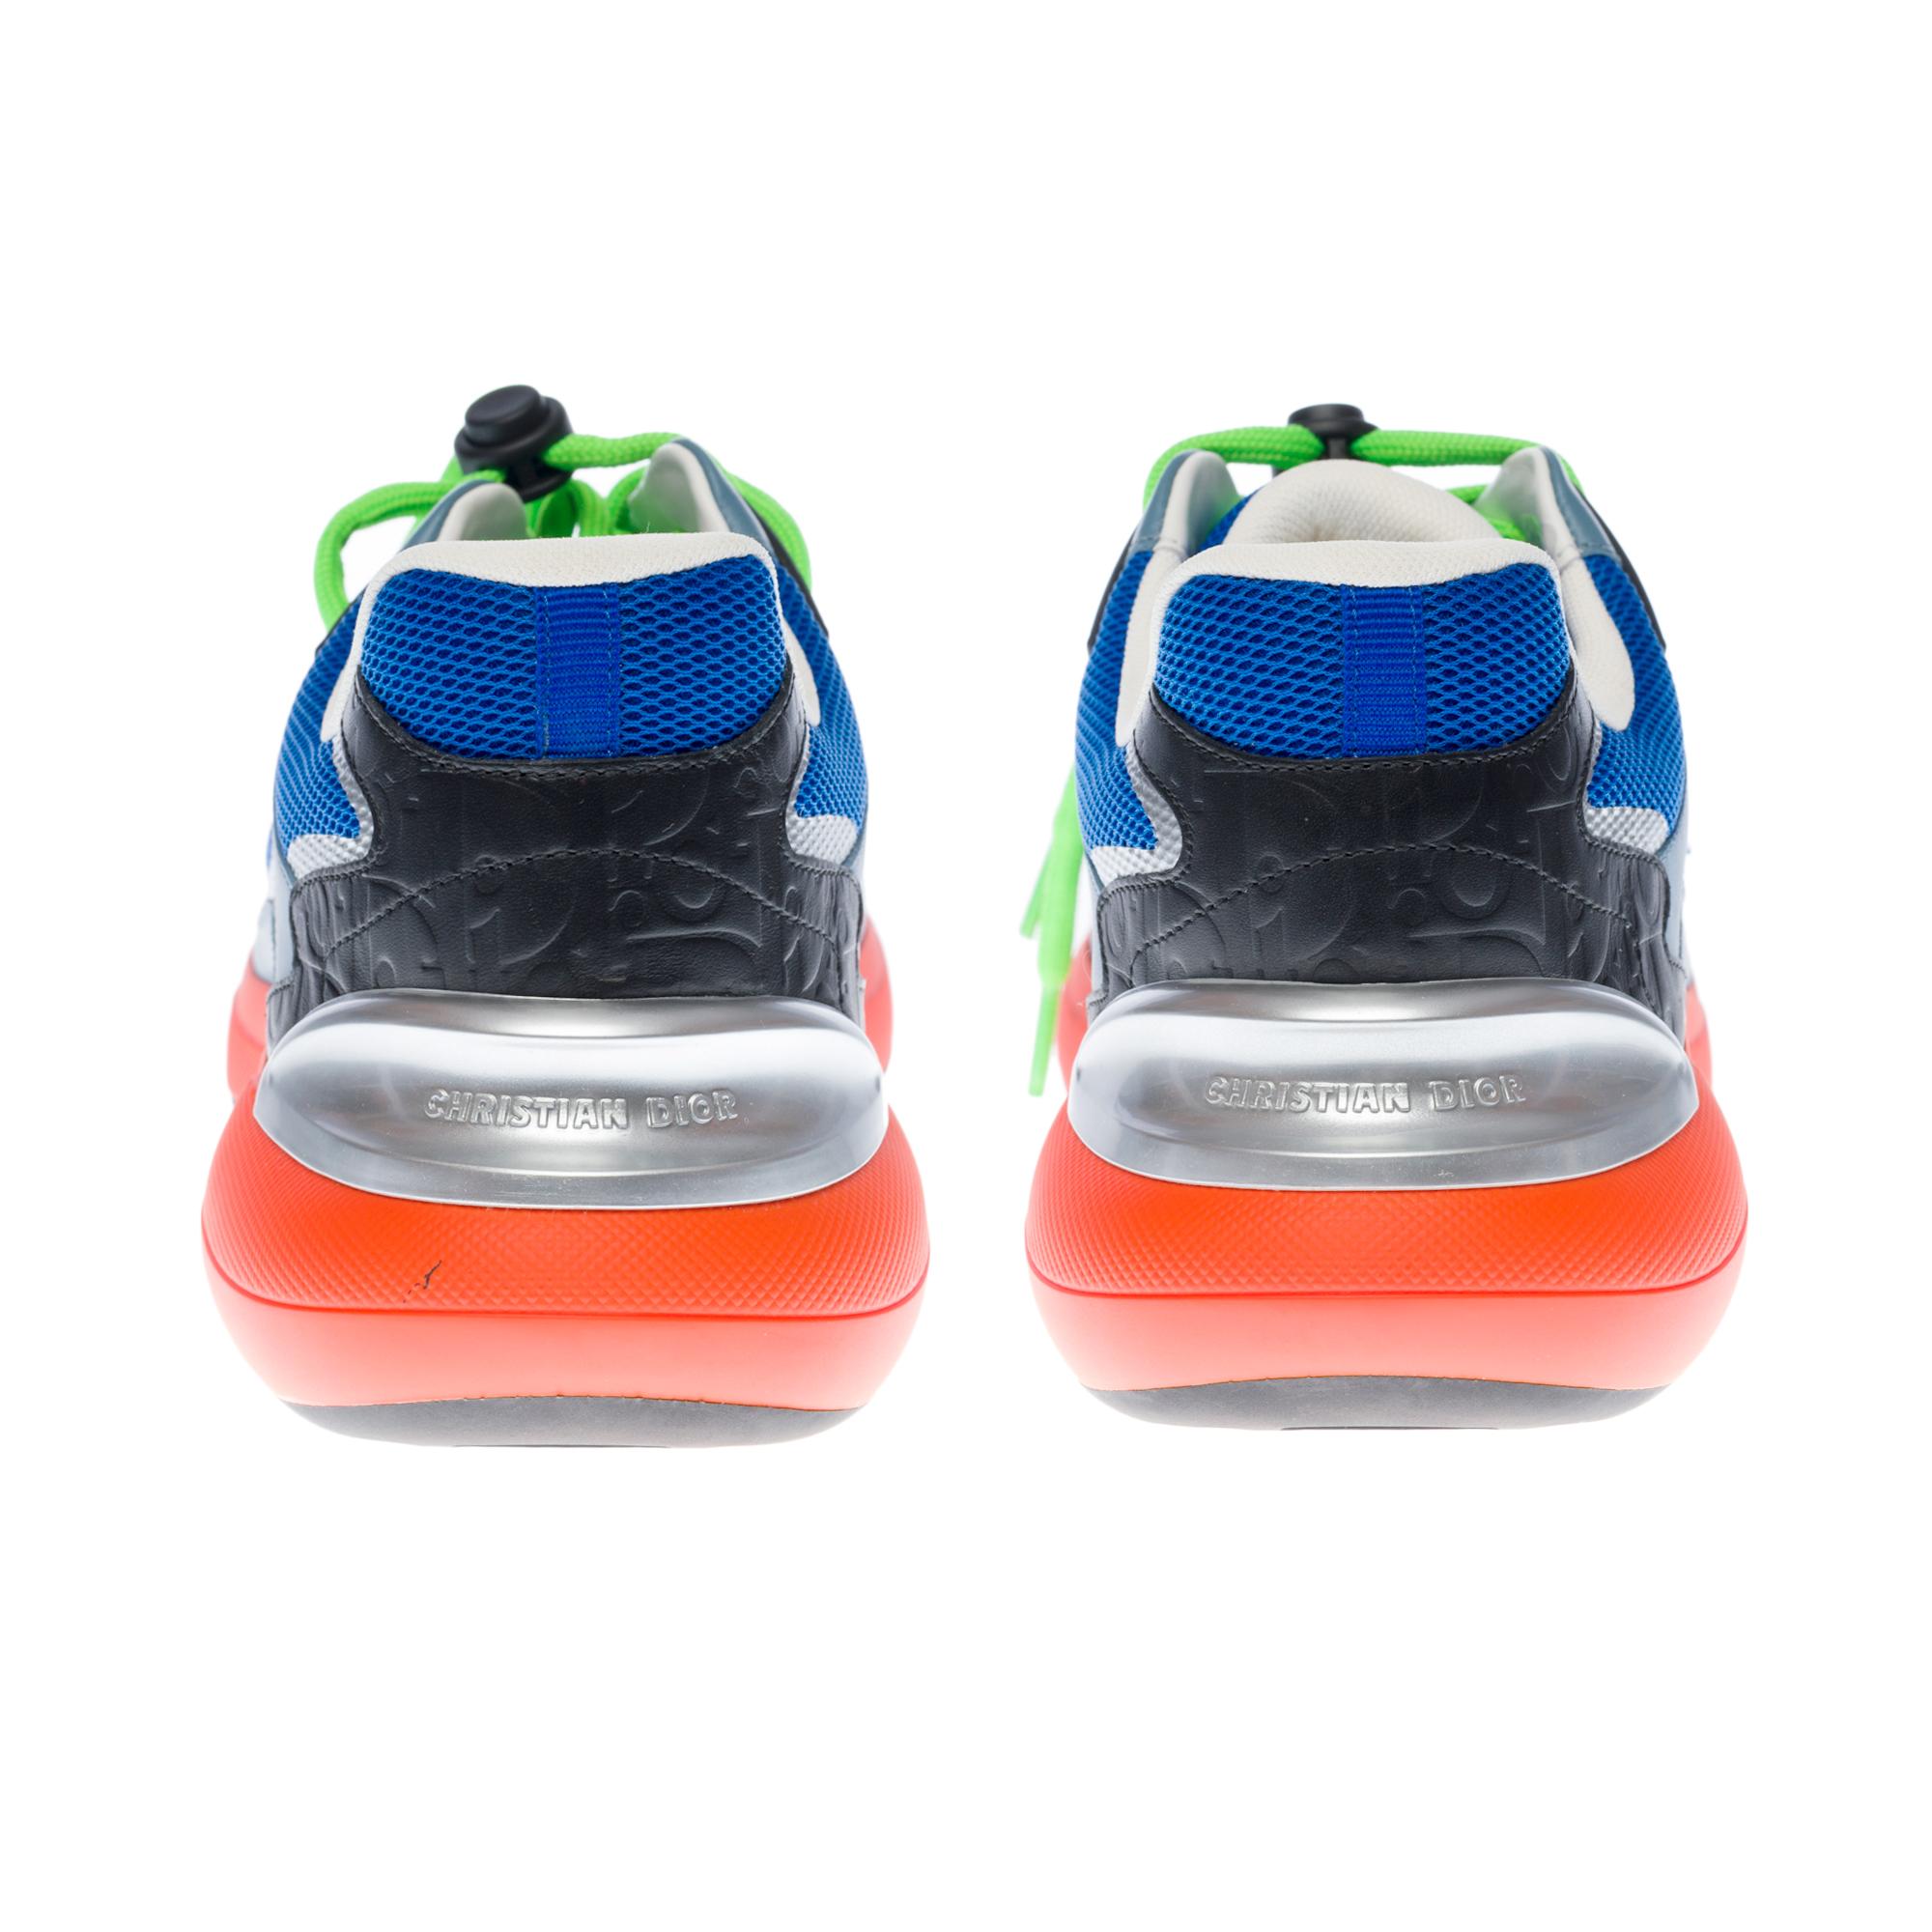 Black New Sneakers Dior B24 Sorayama Kim Jones in blue, orange and green For Sale